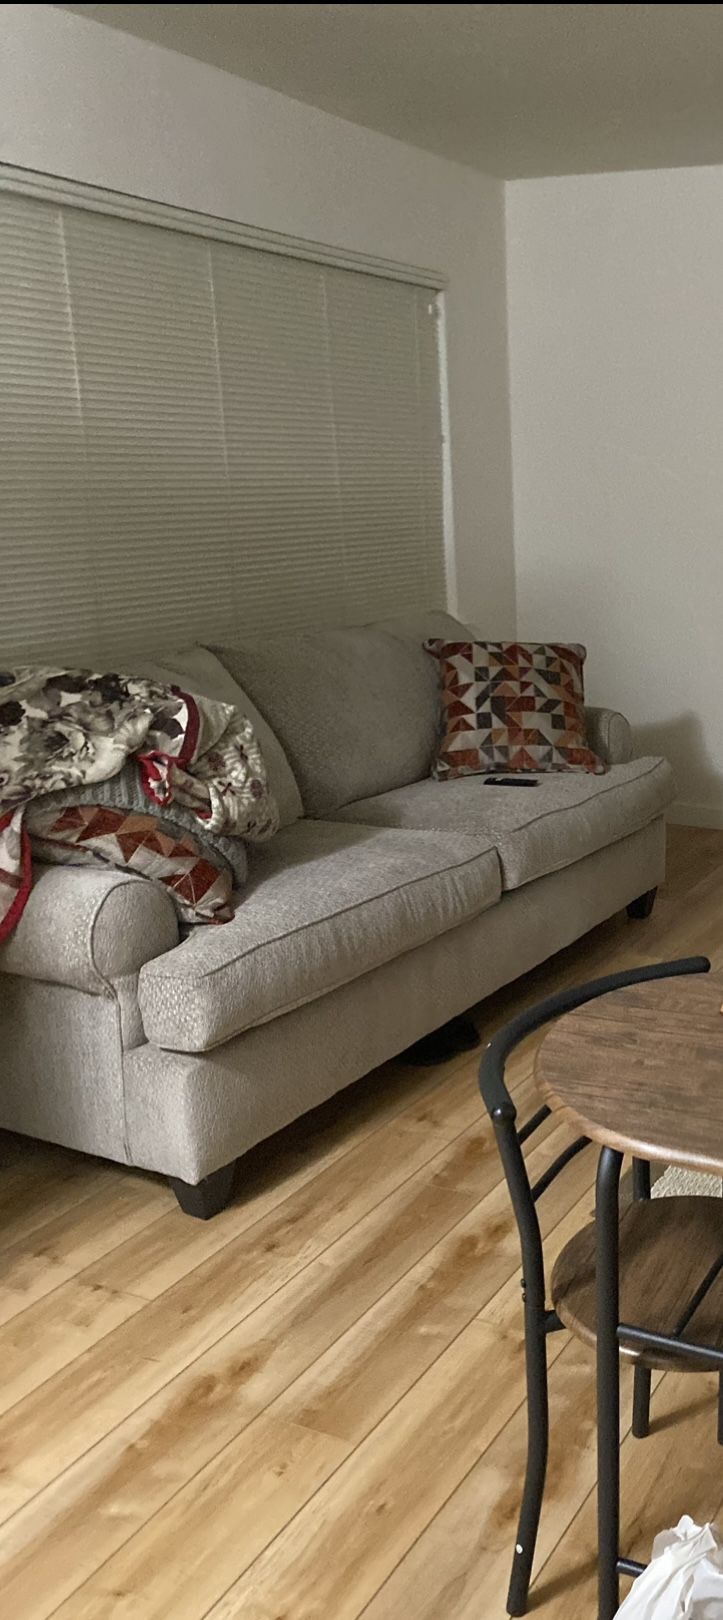 Sofa For Sale, Light Brown Color